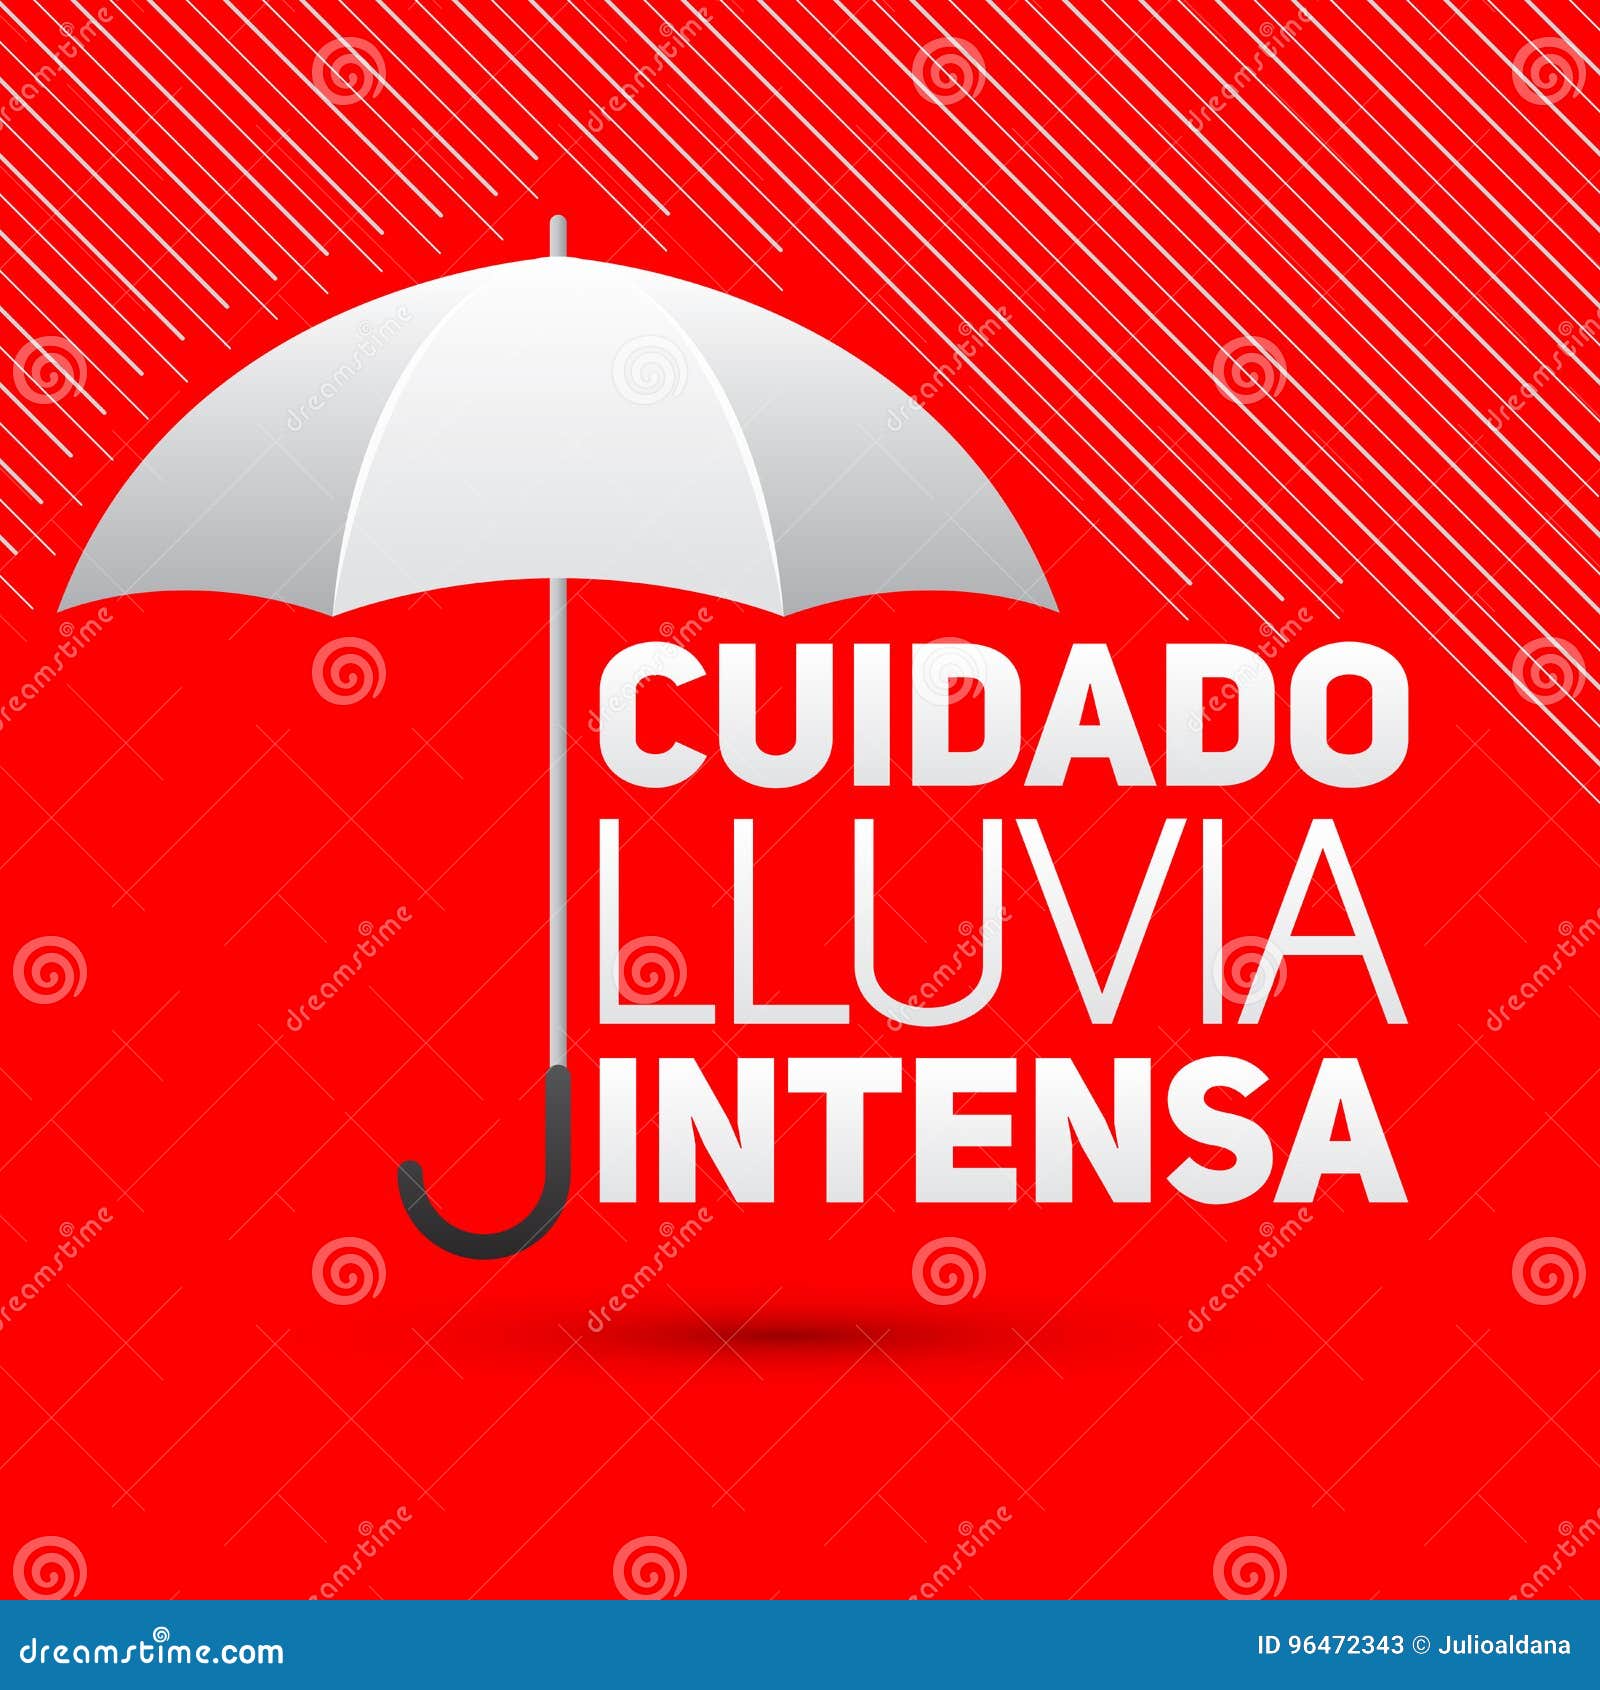 cuidado lluvia intensa, be careful heavy rain spanish text